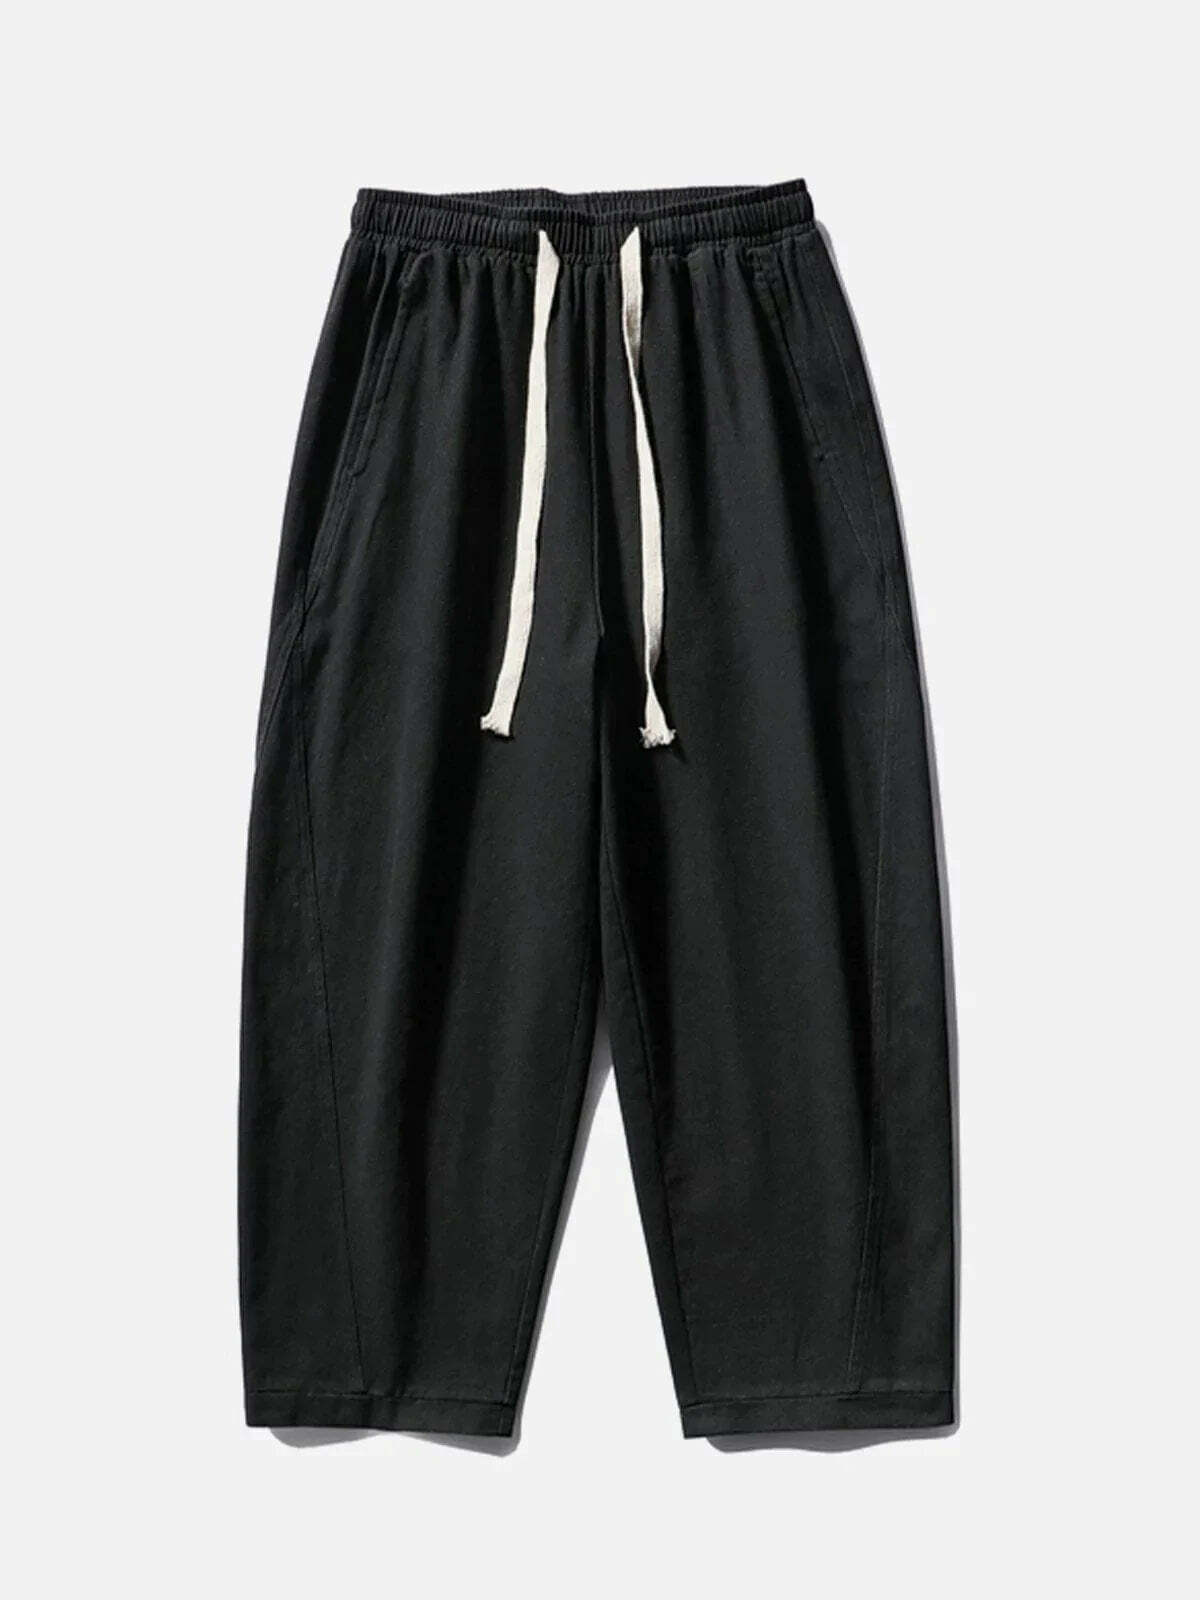 minimalist drawstring pants sleek & versatile streetwear 4959